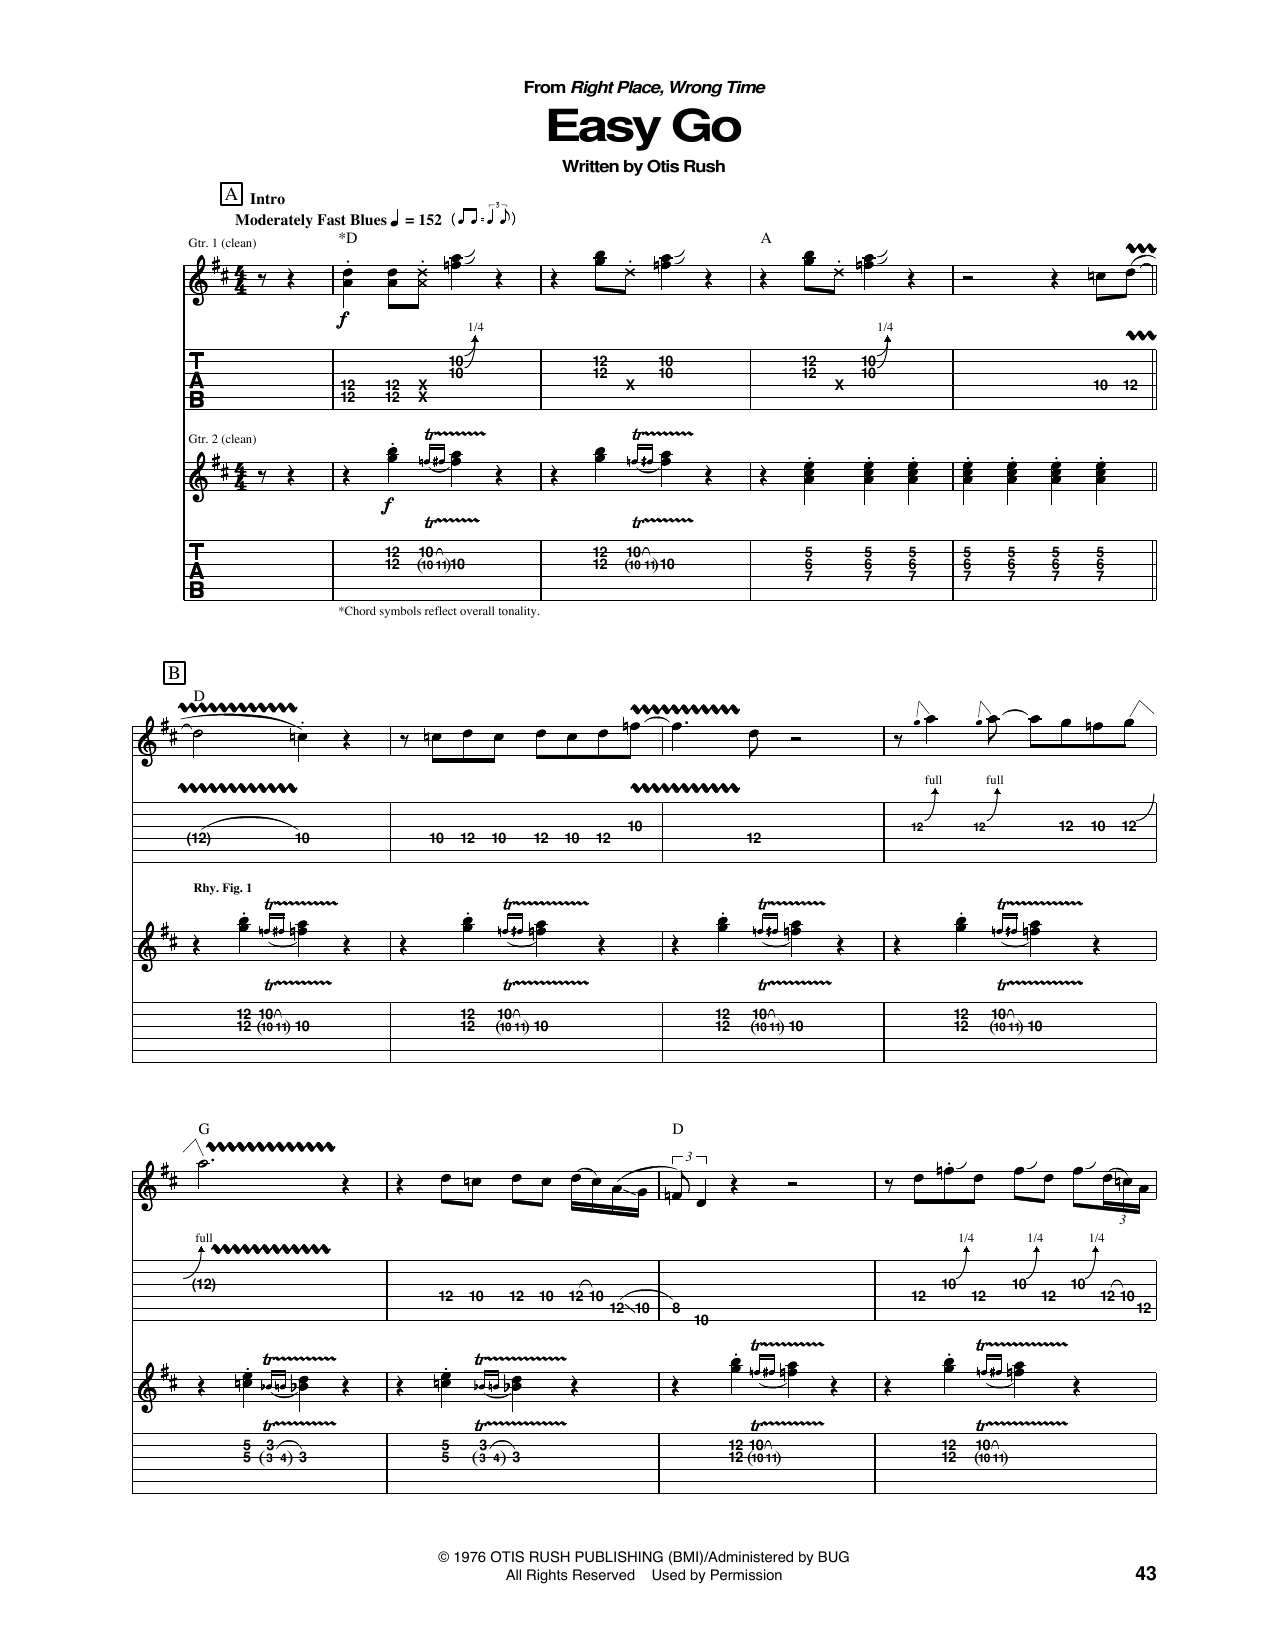 Otis Rush Easy Go Sheet Music Notes & Chords for Guitar Tab - Download or Print PDF